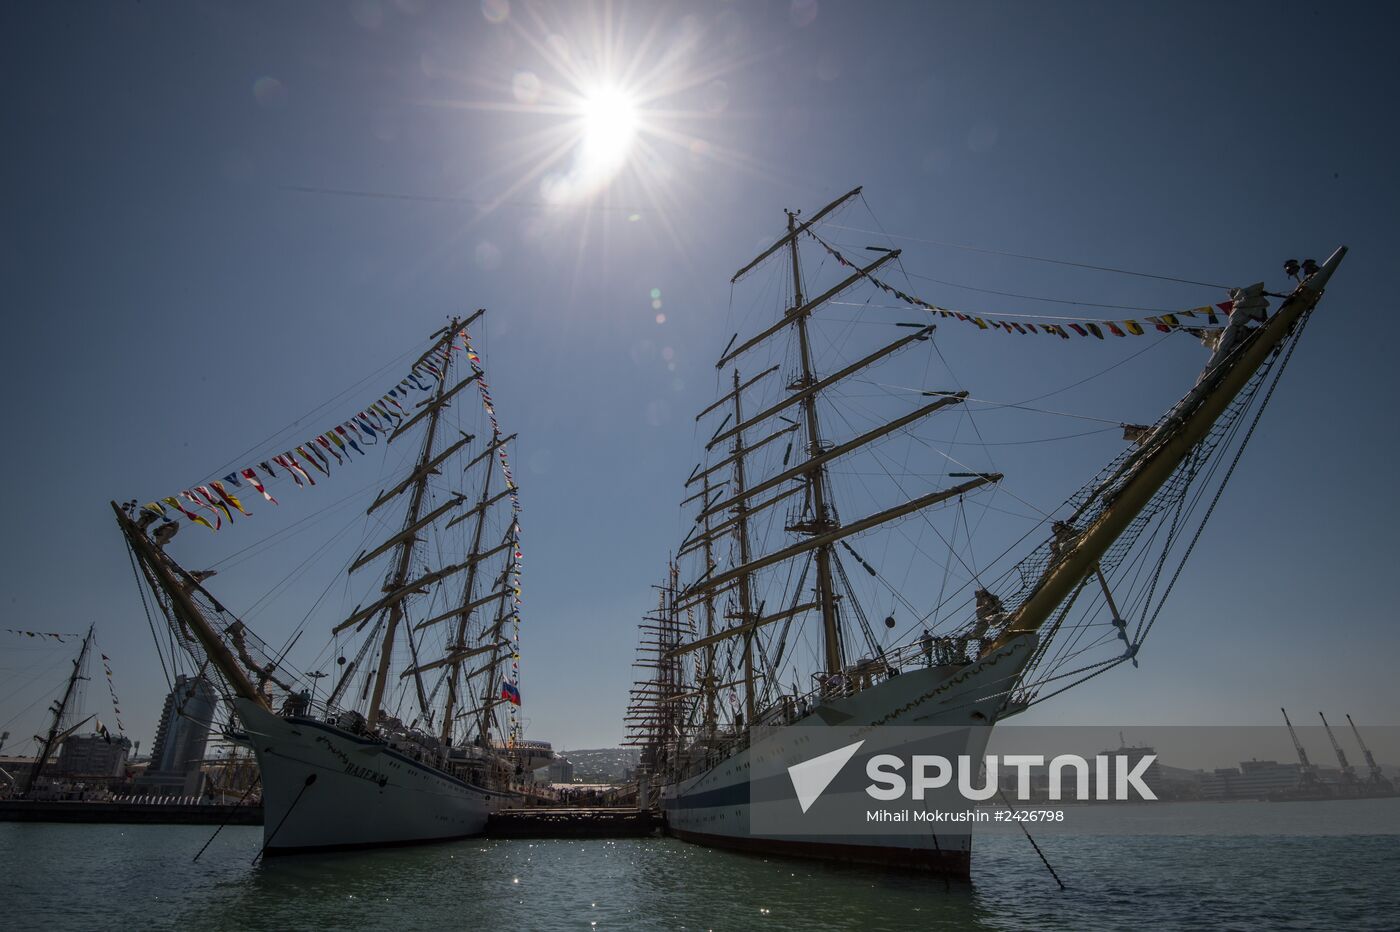 The Black Sea tall ship regatta